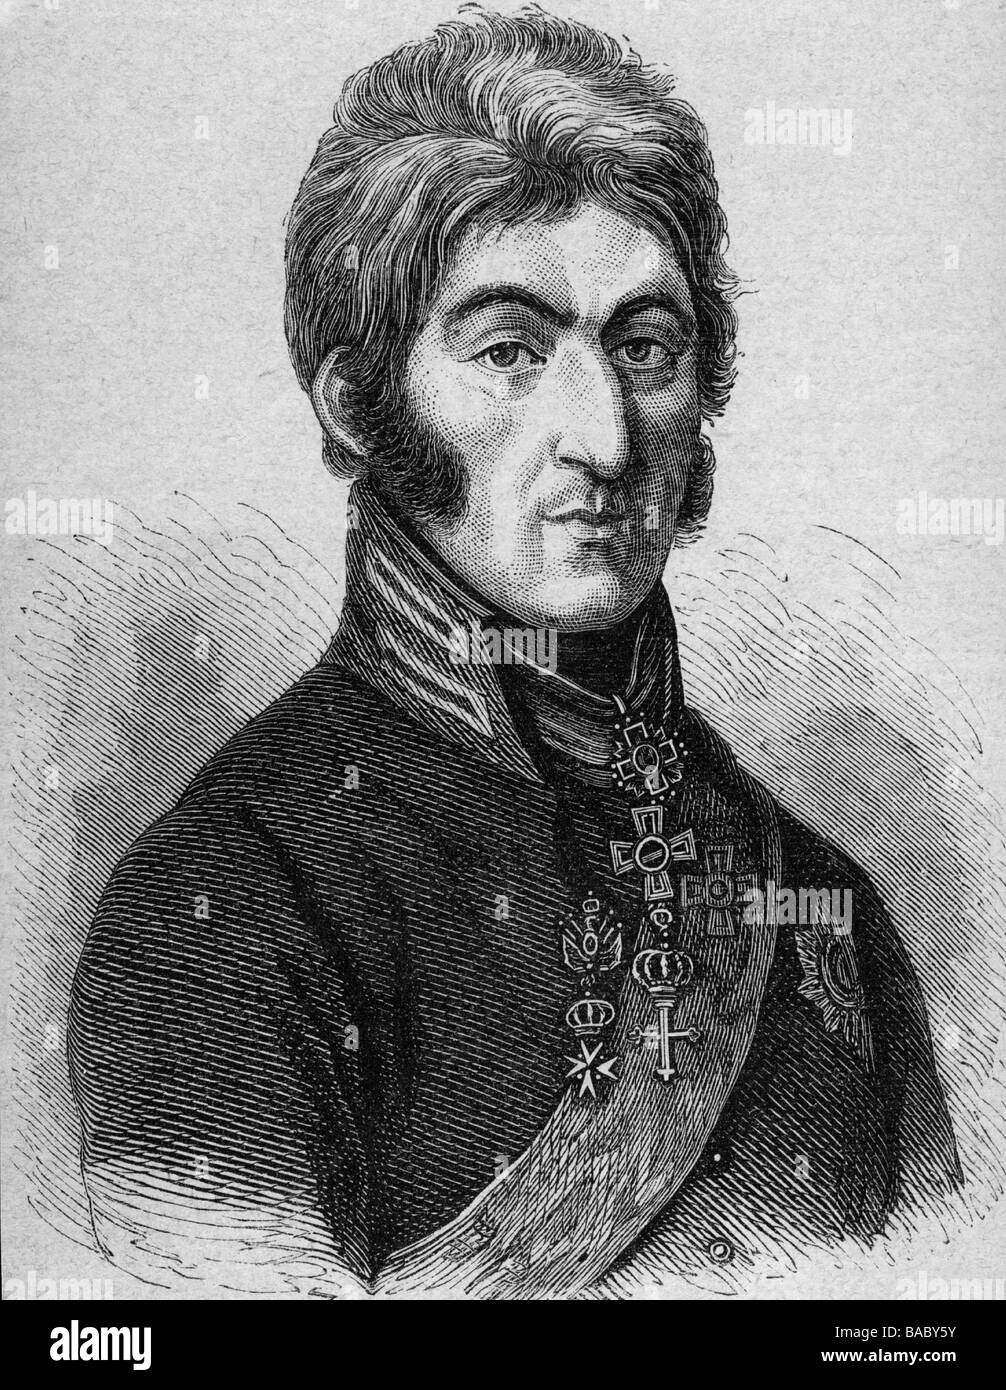 Bagration, Pyotr Ivanovich, Prince, 1765 - 24.9.1812, Russian general, portrait, wood engraving, 19th century, Stock Photo